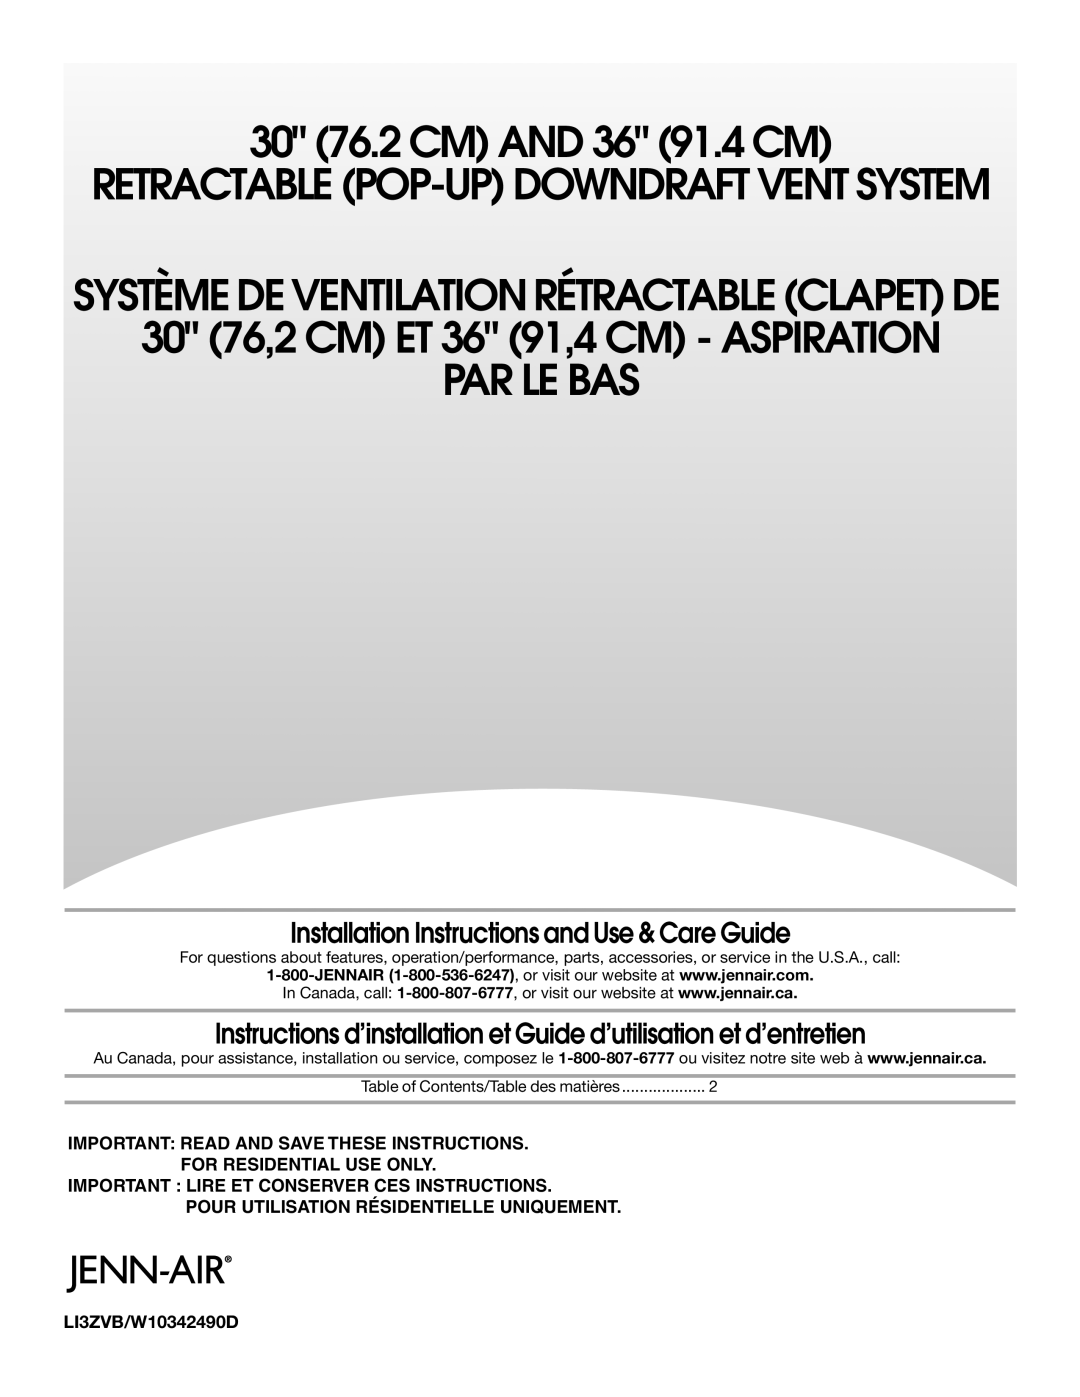 Jenn-Air LI3ZVB/W10342490D installation instructions 30 76.2 CM AND 36 91.4 CM, Retractable Pop-Up Downdraft Vent System 